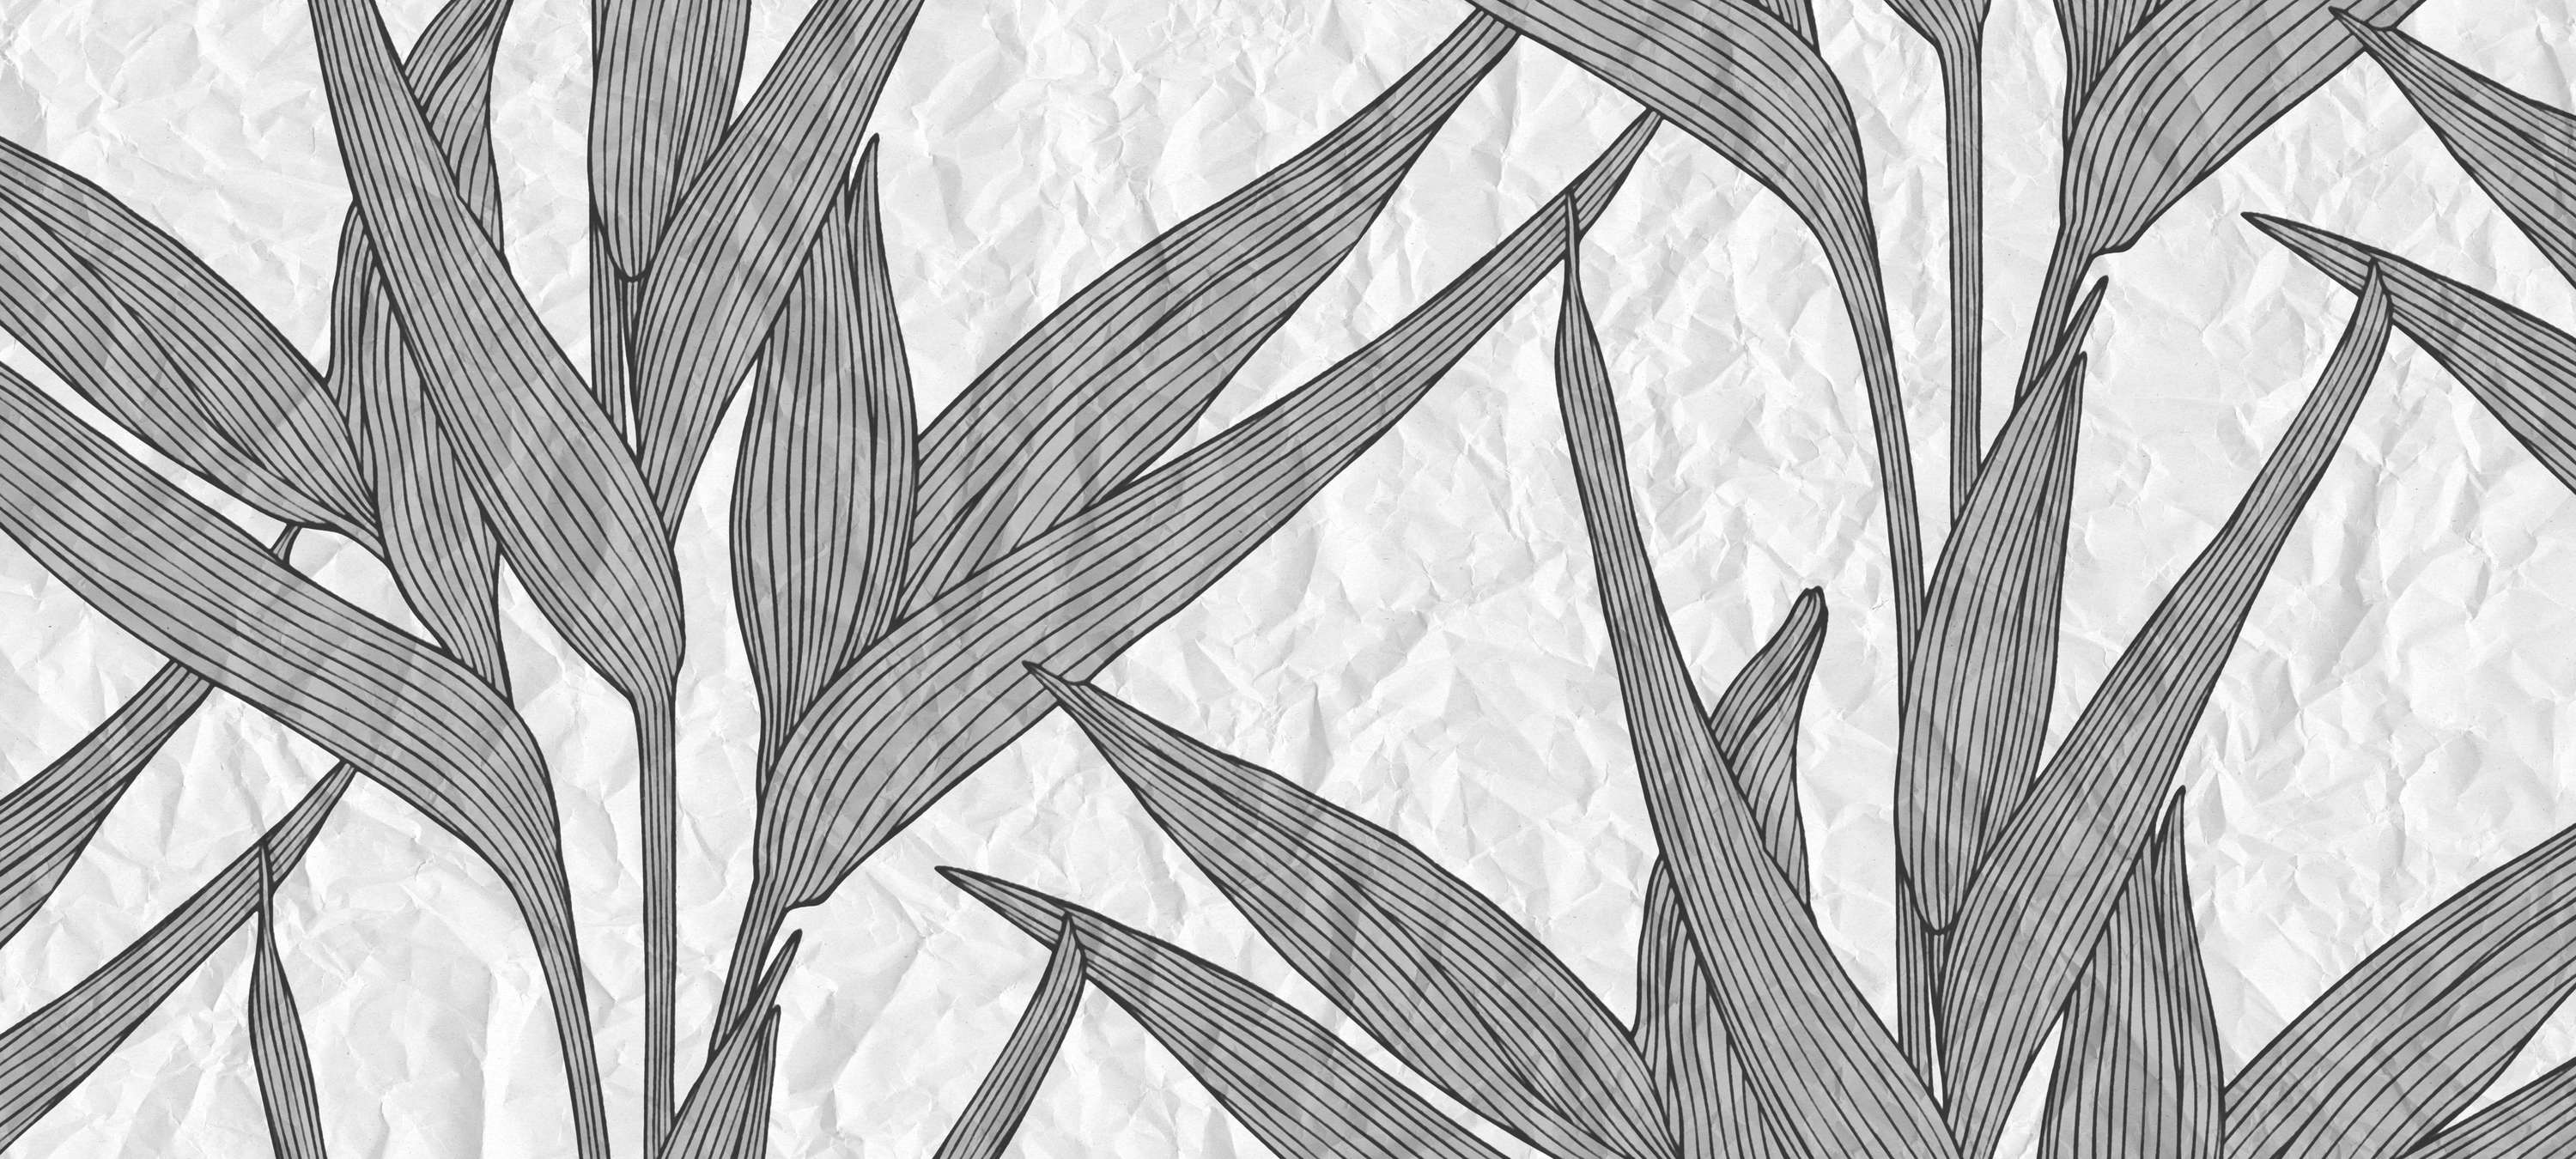             Fototapete Blätter & Papier-Optik – Grau, Weiß
        